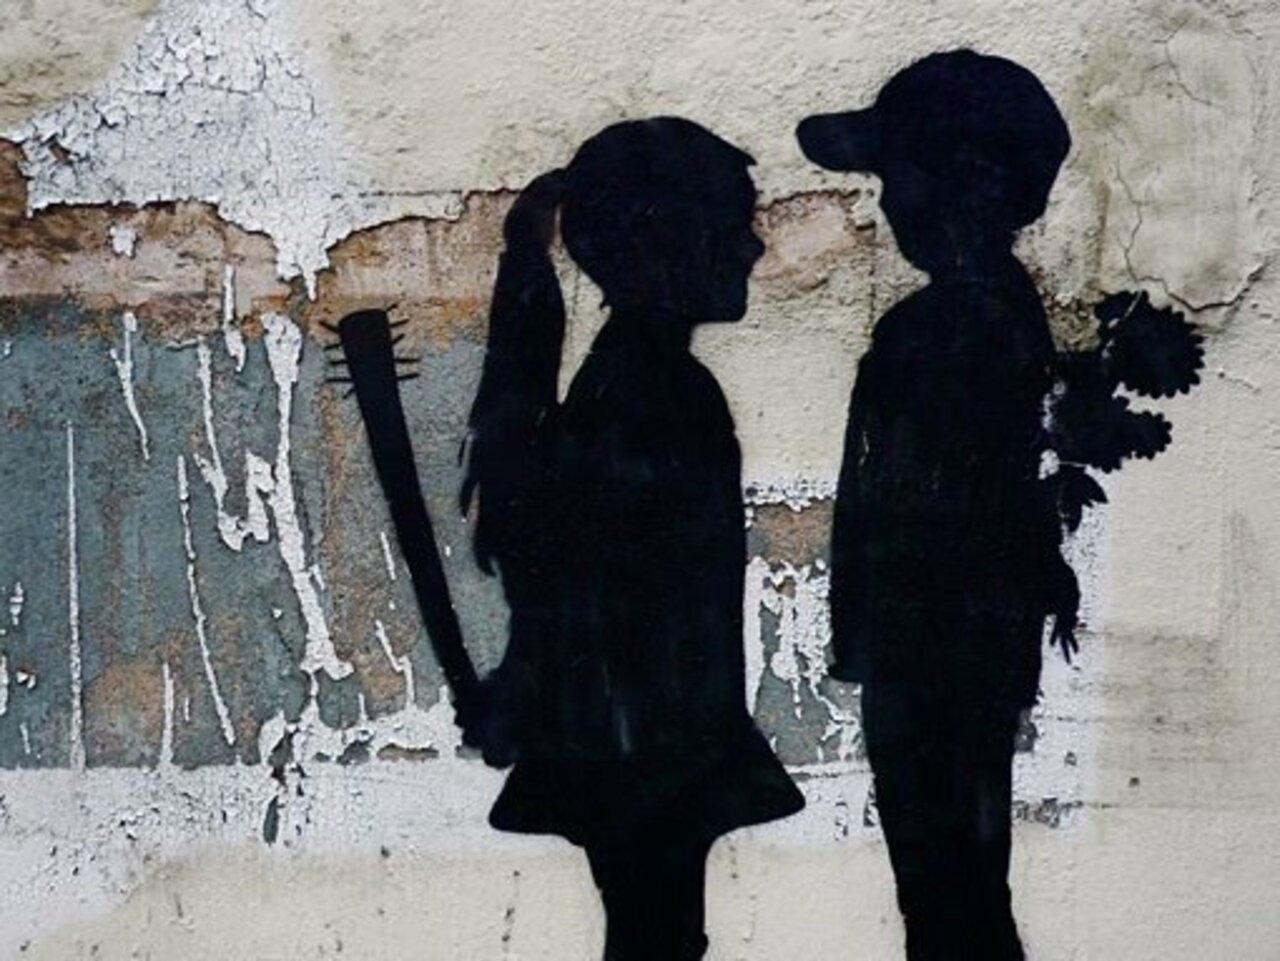 ¿ Innocence ? - #Creative #StreetArt#art #kids #urbanart #feelings #creative #joy #wild http://beartistbeart.com/2016/10/17/innocence-creative-streetart https://t.co/aiU5FUR96q